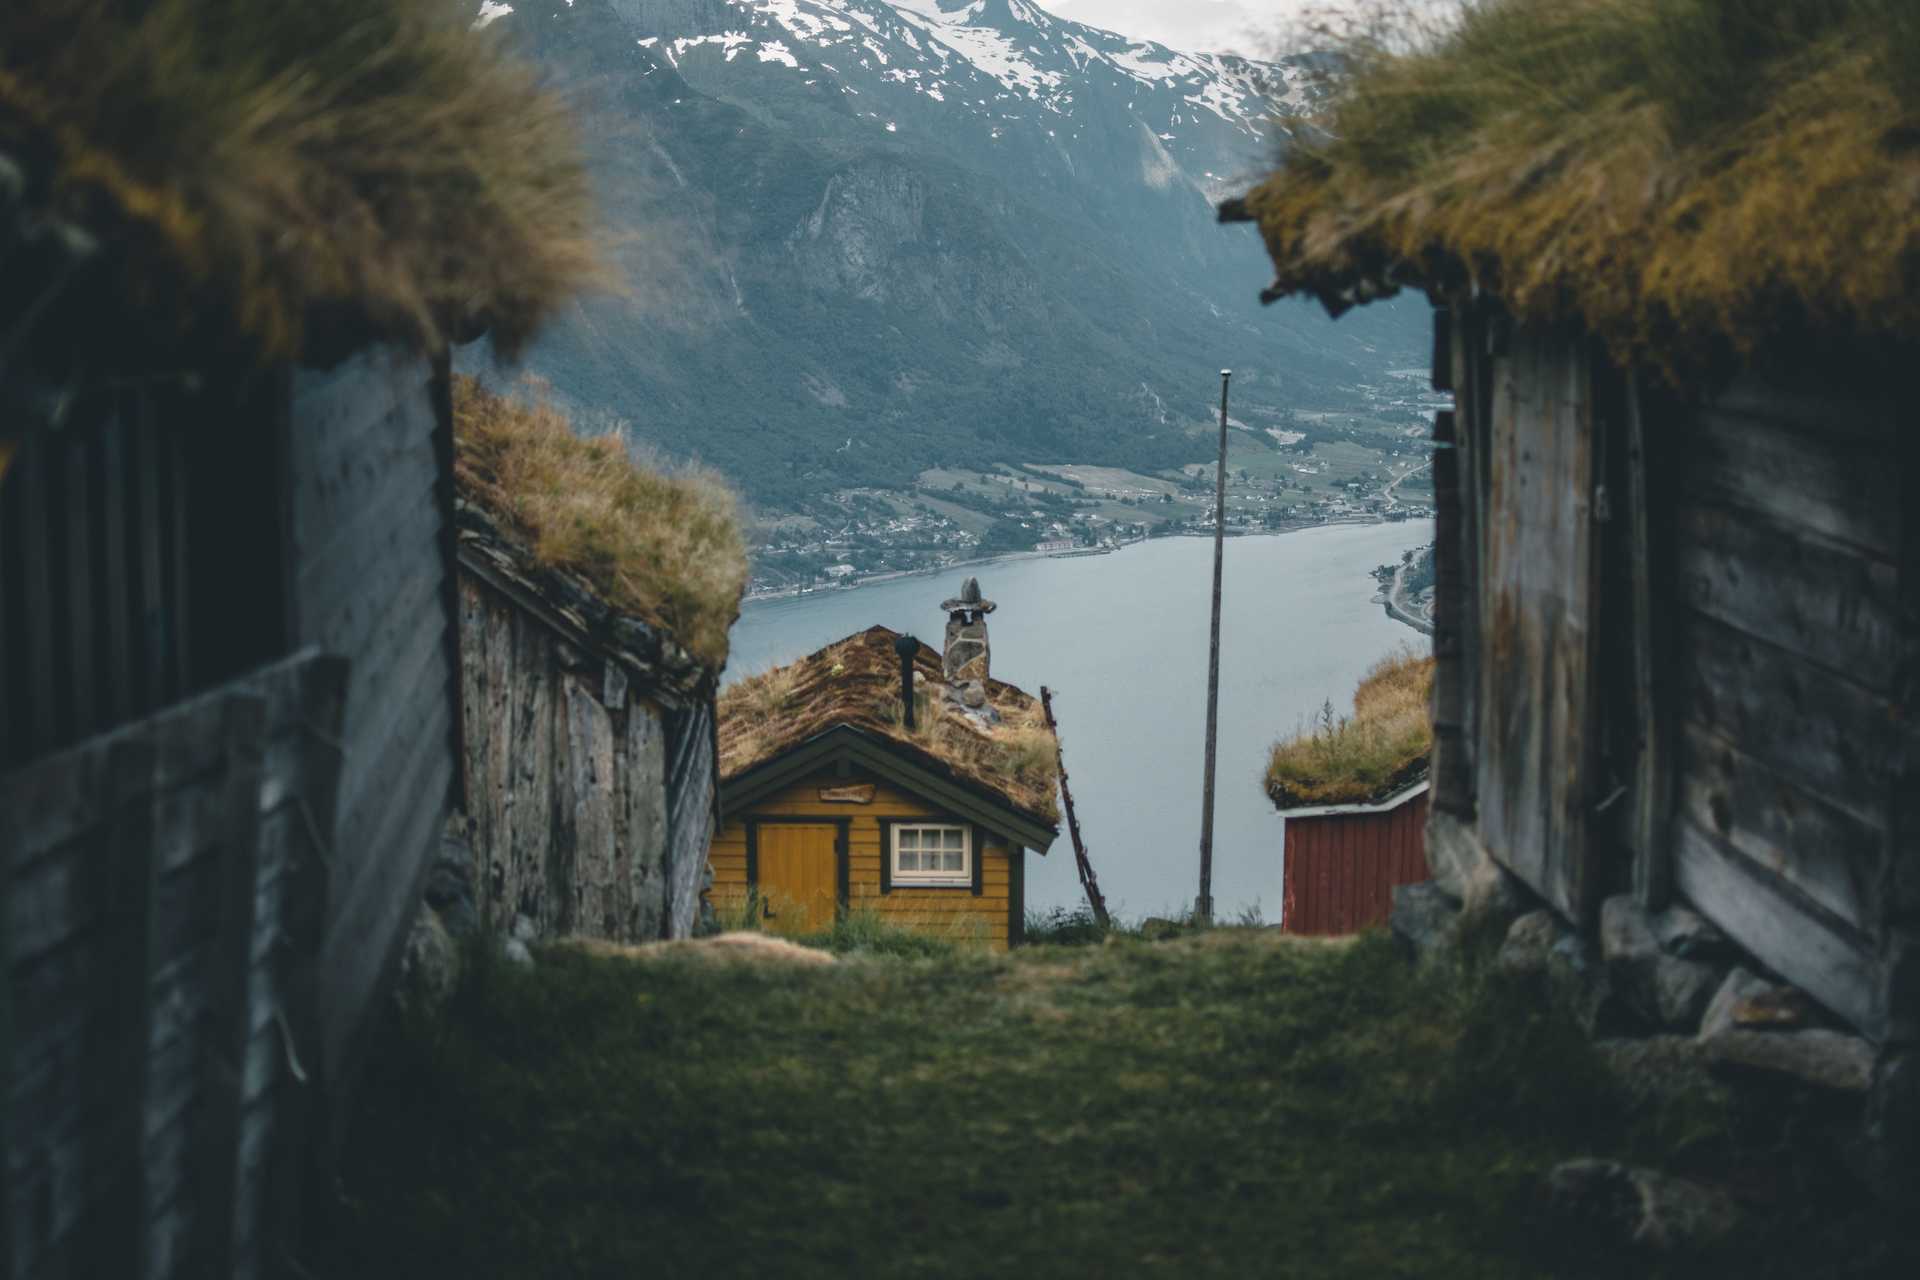  Rakssetra norwegia